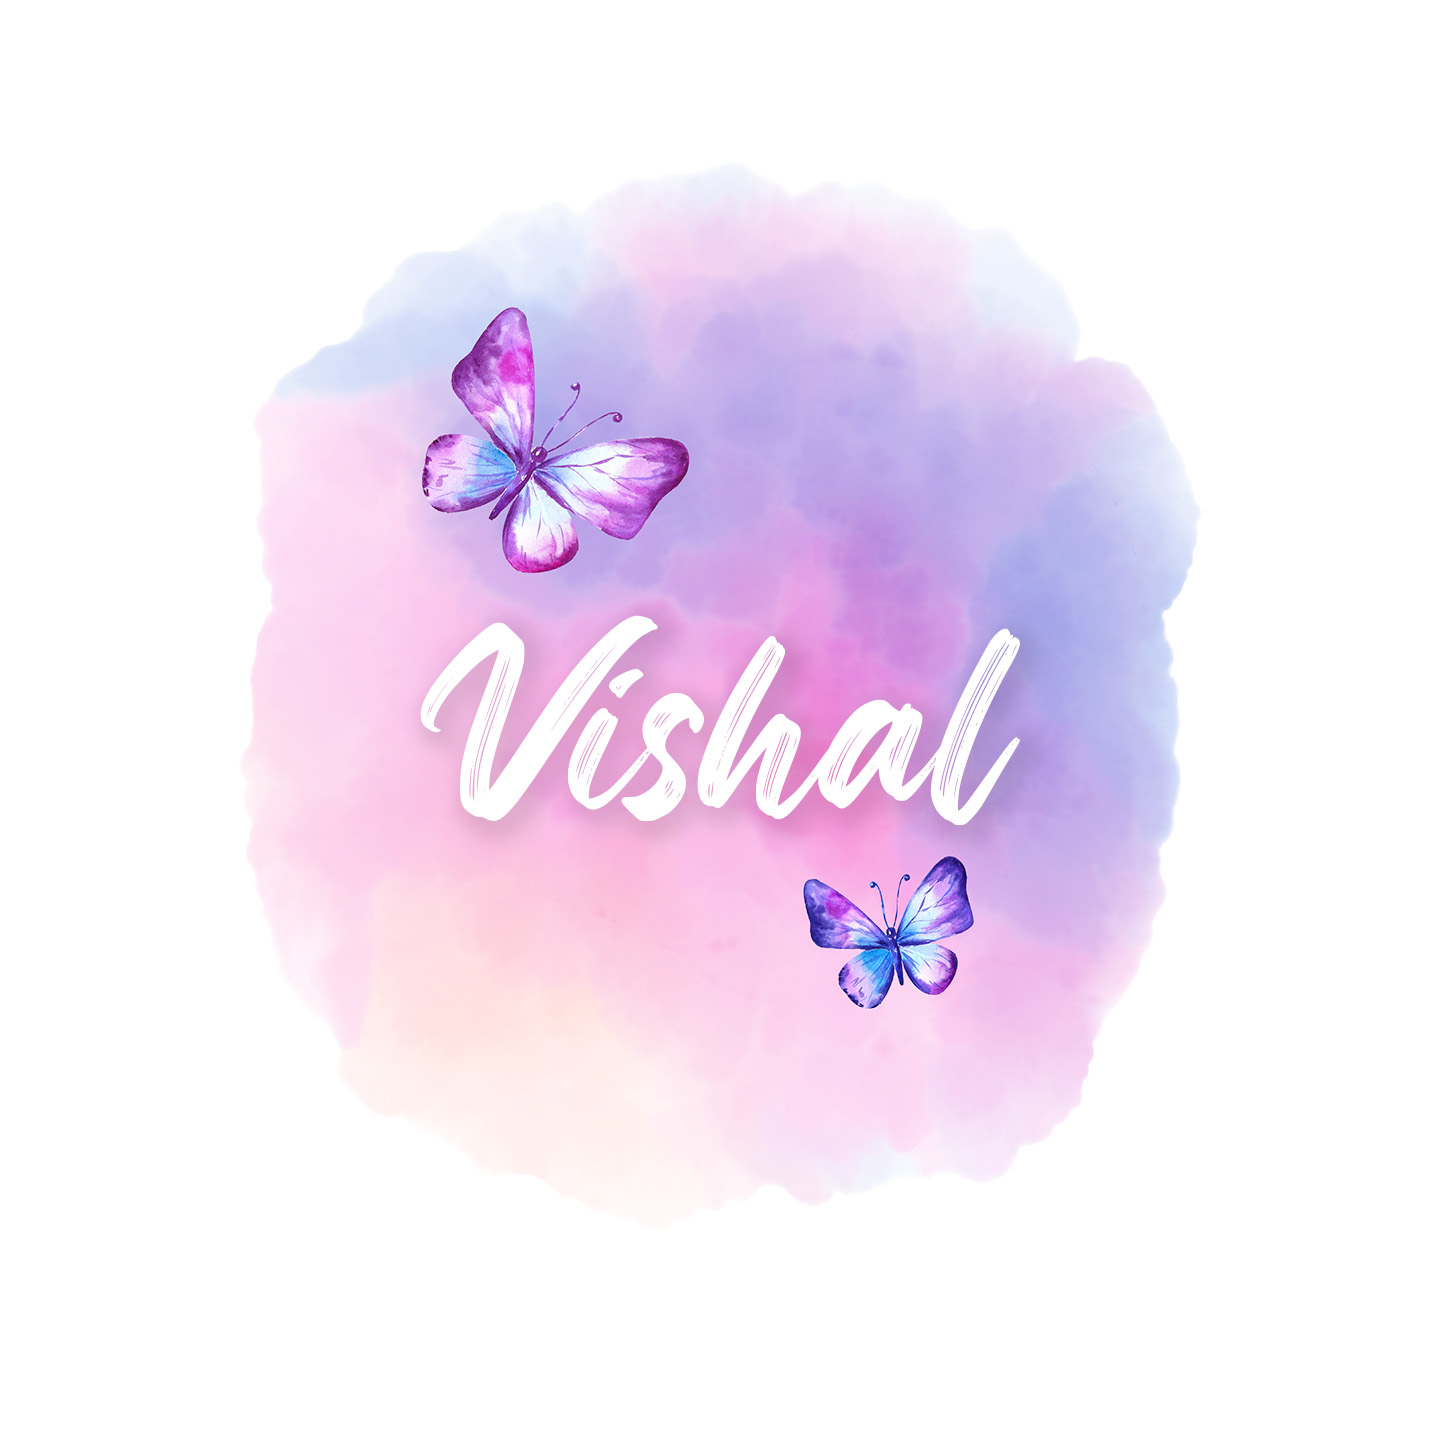 Vishal Logo | Free Name Design Tool from Flaming Text